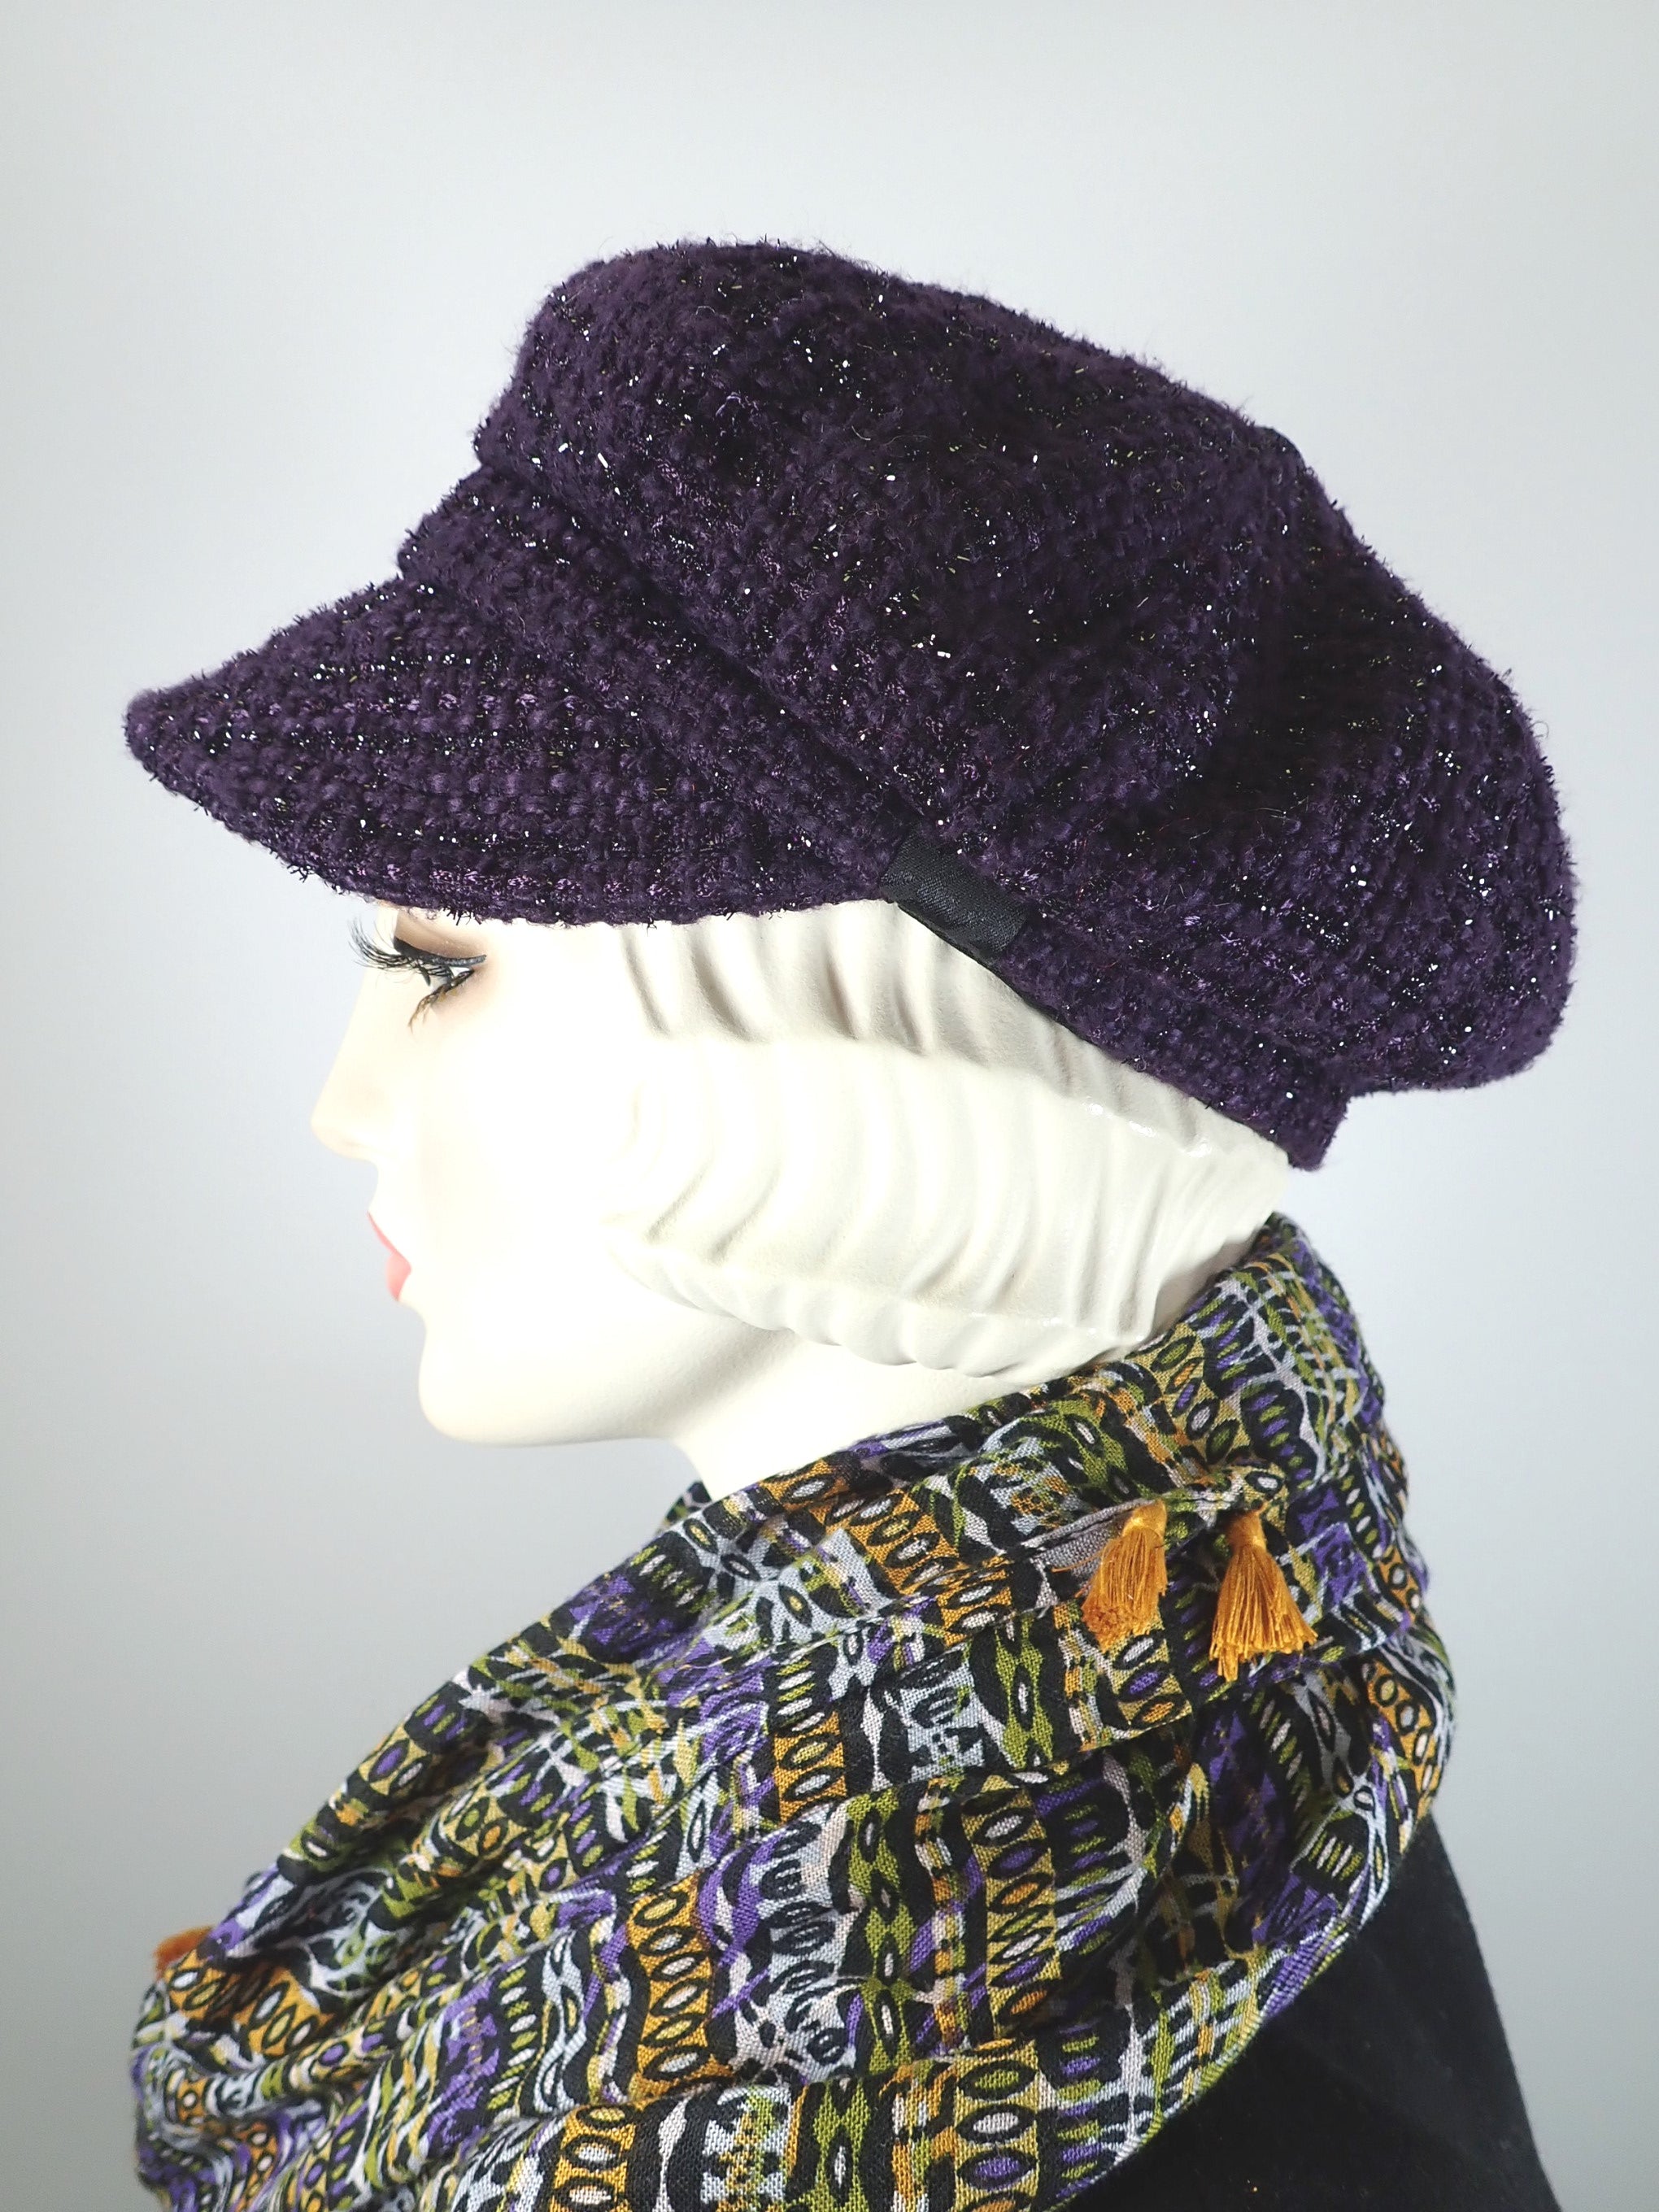 Womens Purple Hat Boucle Newsboy Hat. Ladies Purple Sparkle Cap, Womens Slouchy Hat Purple Newsboy Hat. Casual Ladies soft hat. Travel cap.